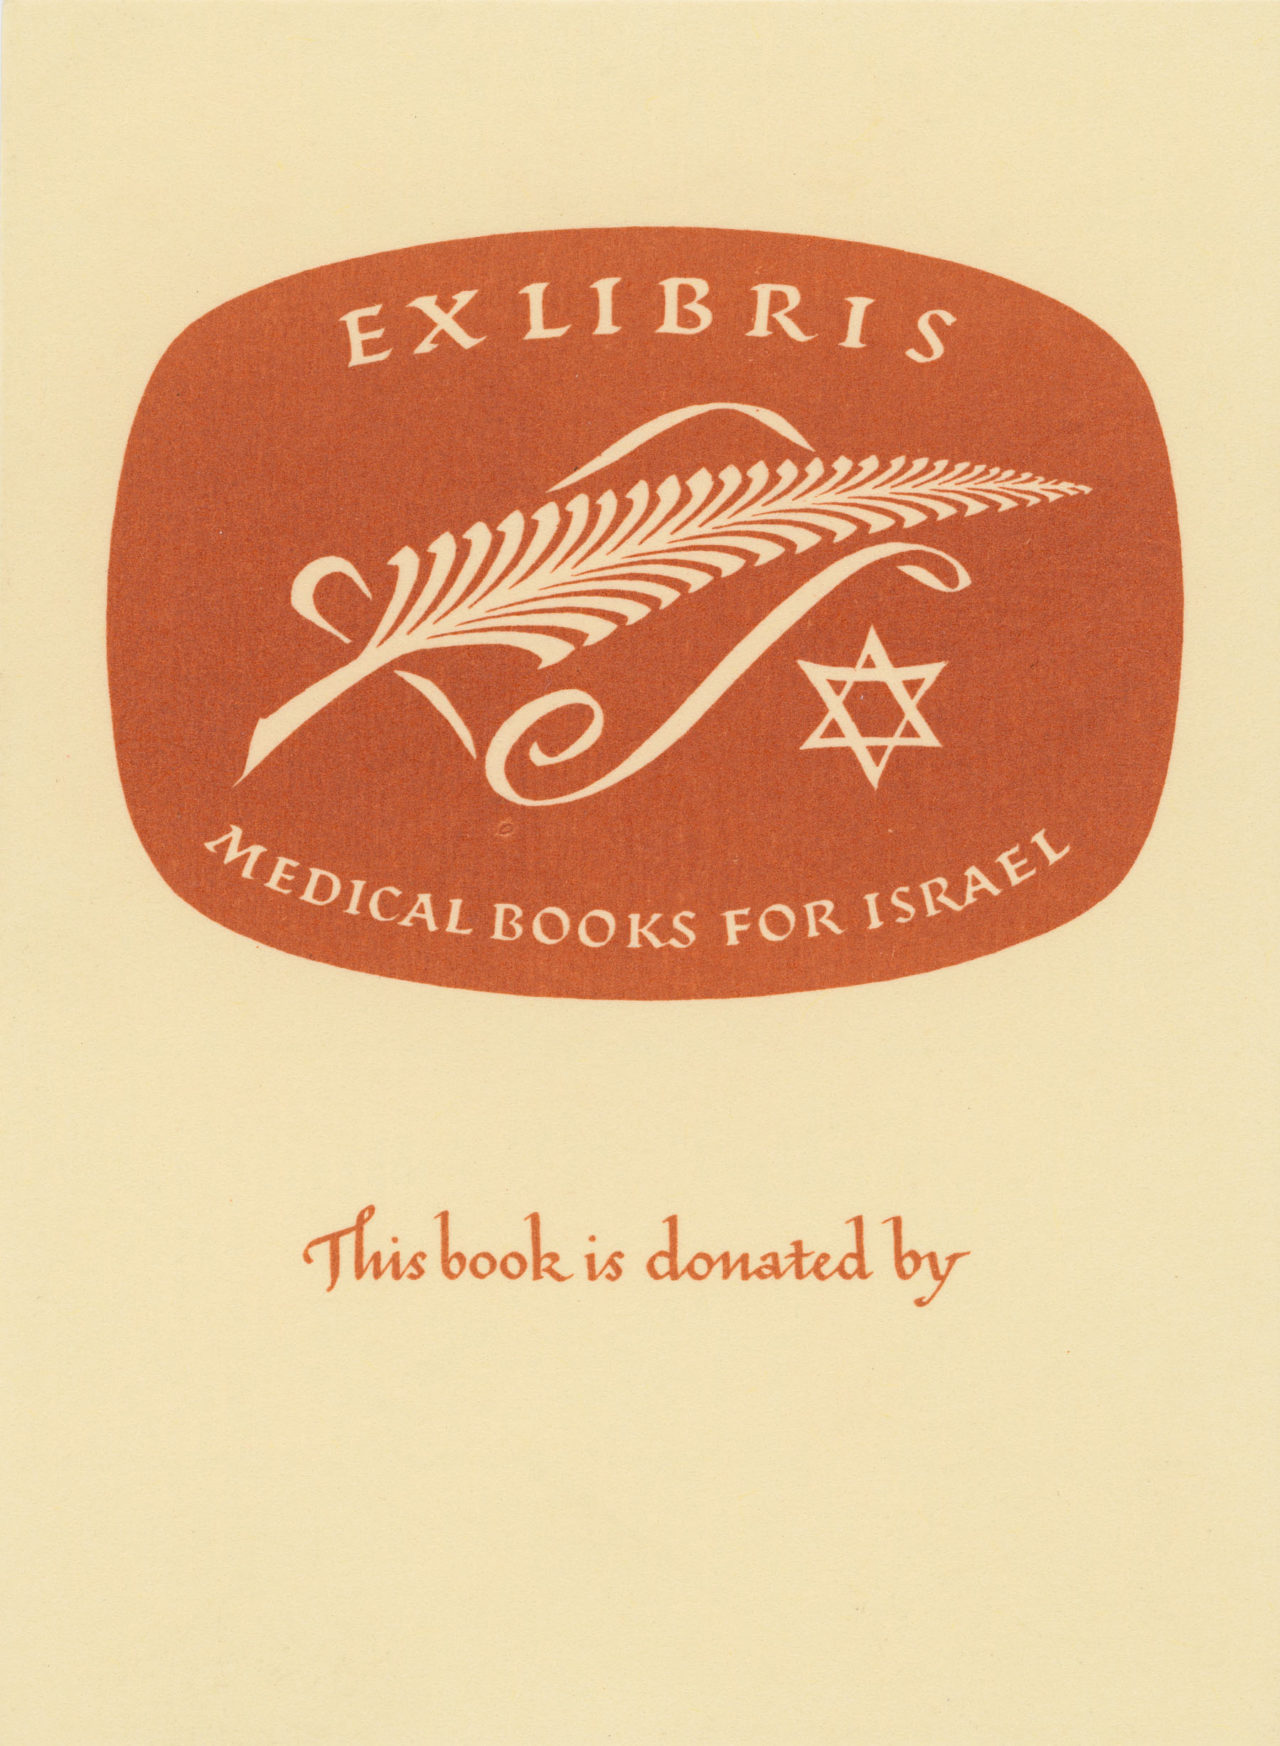 Ex libris Medical Books for Israel